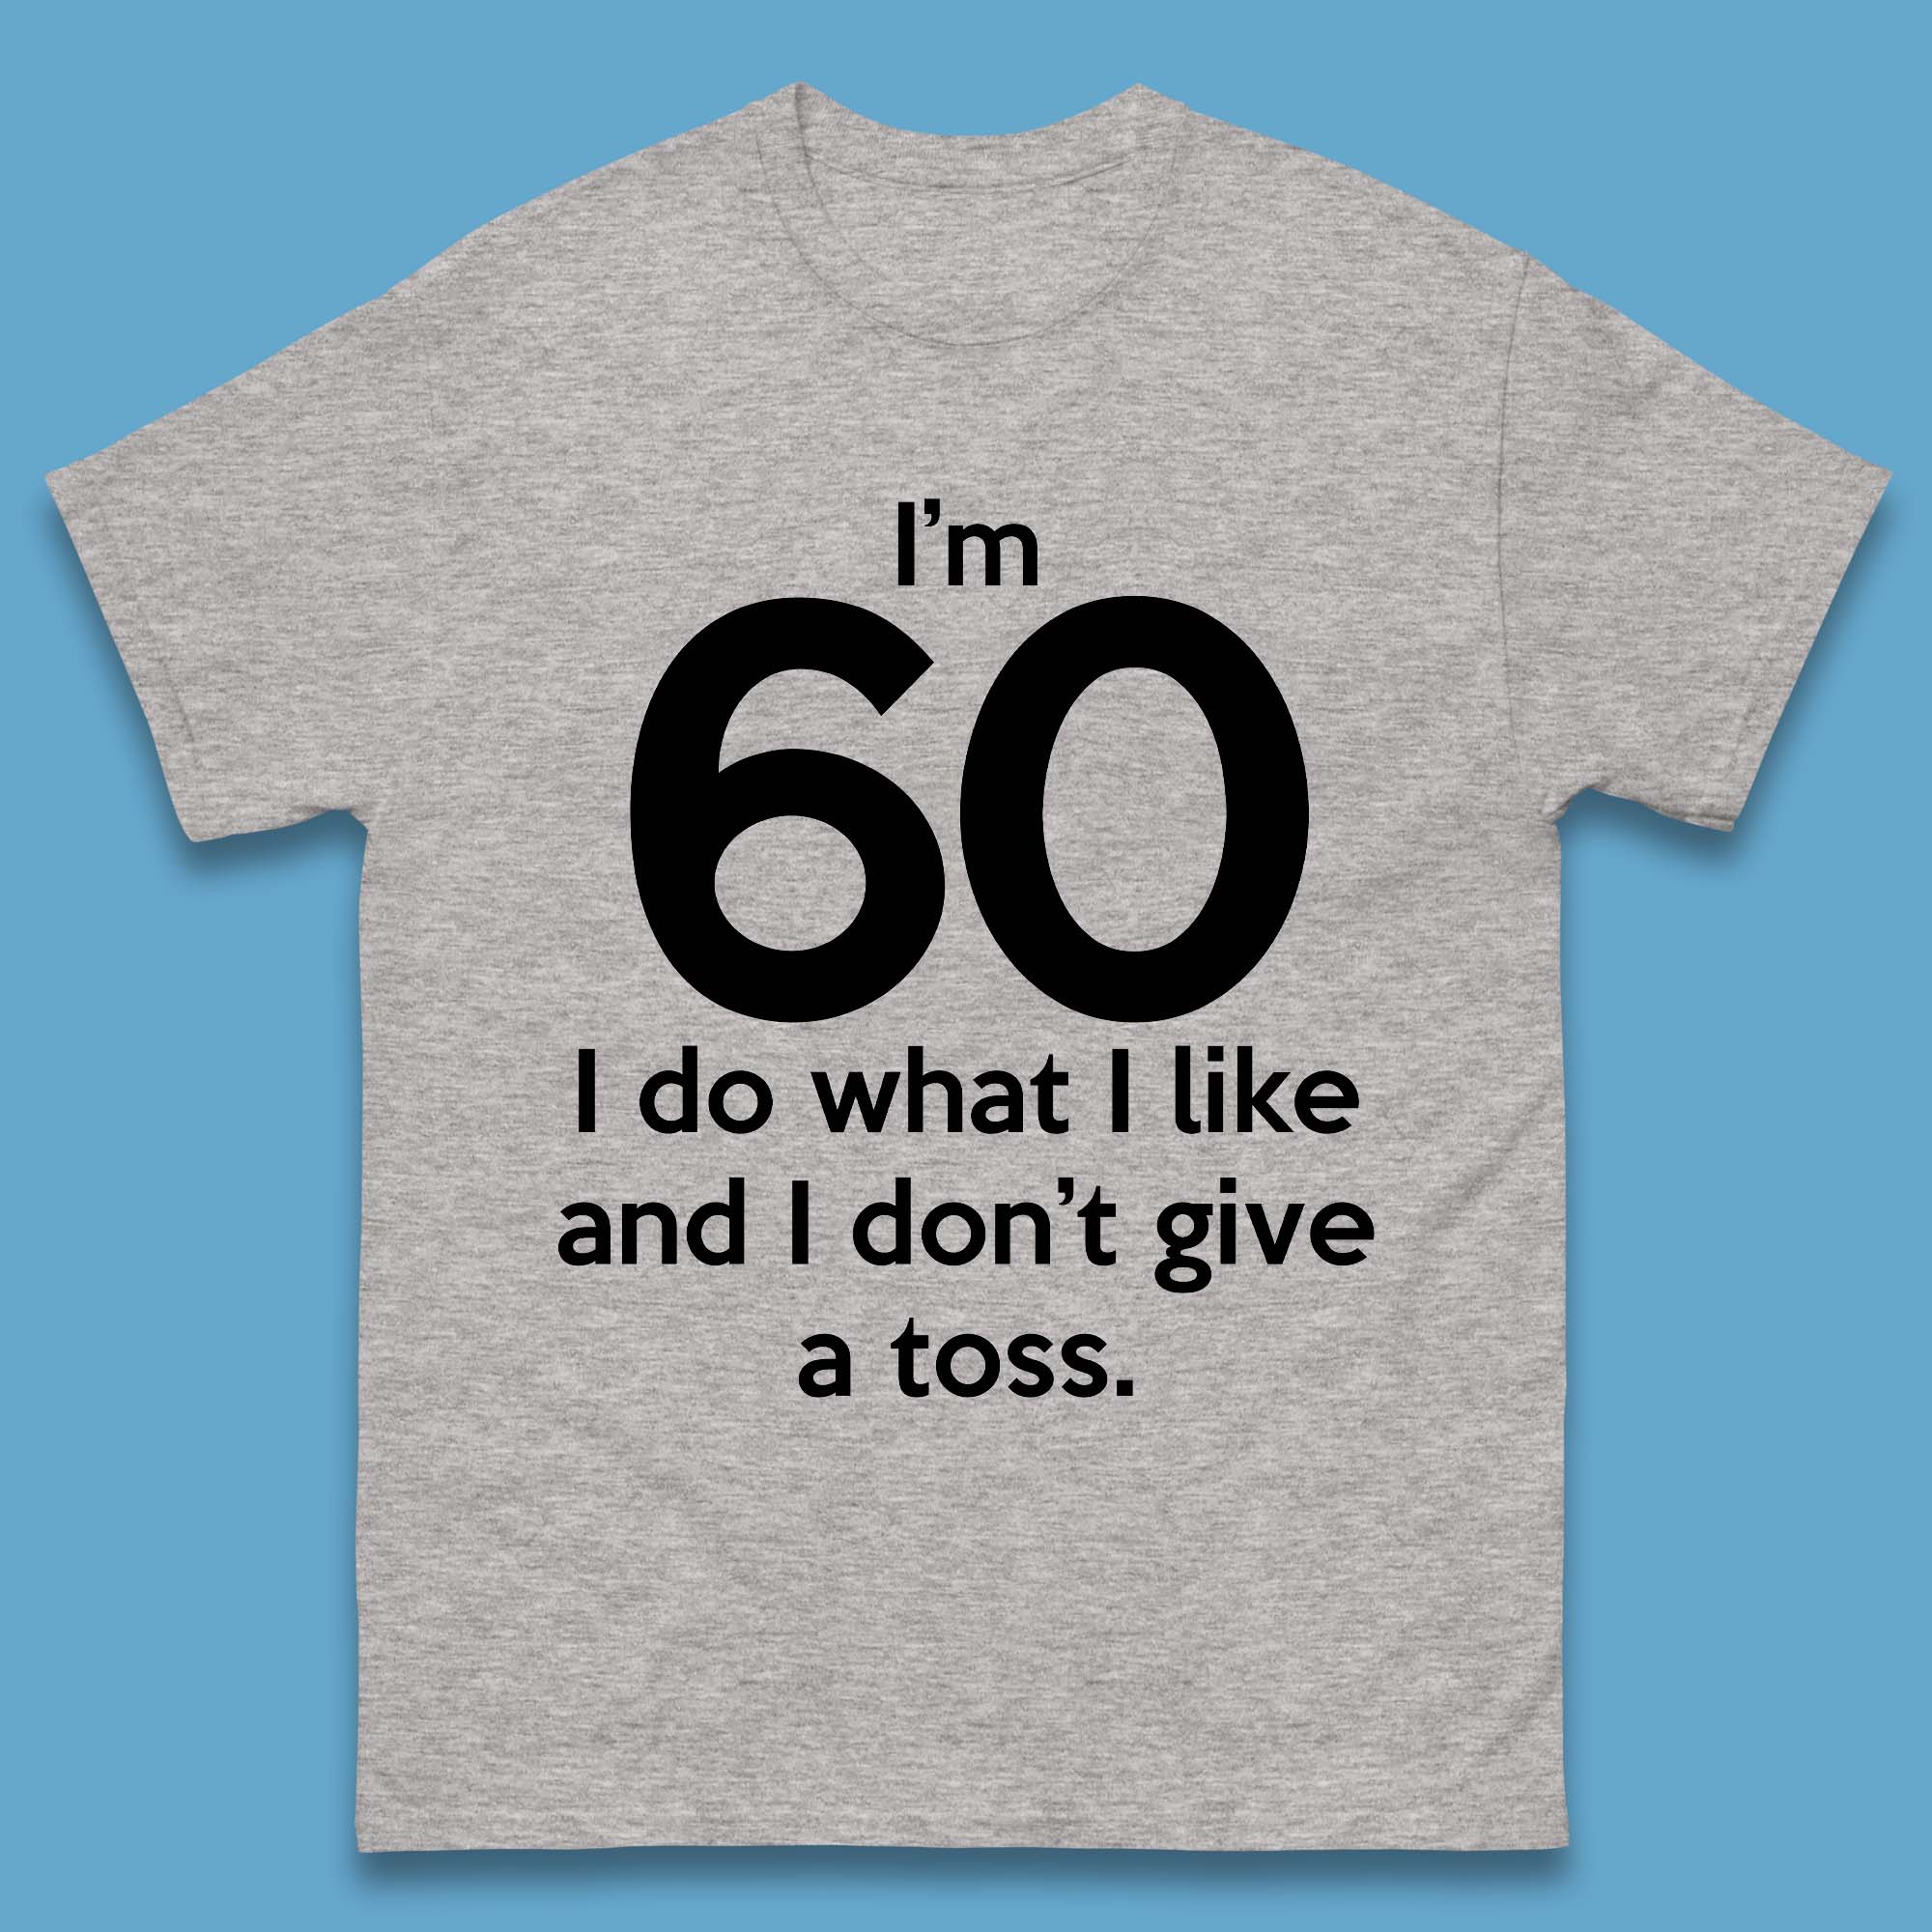 60th Birthday T Shirt